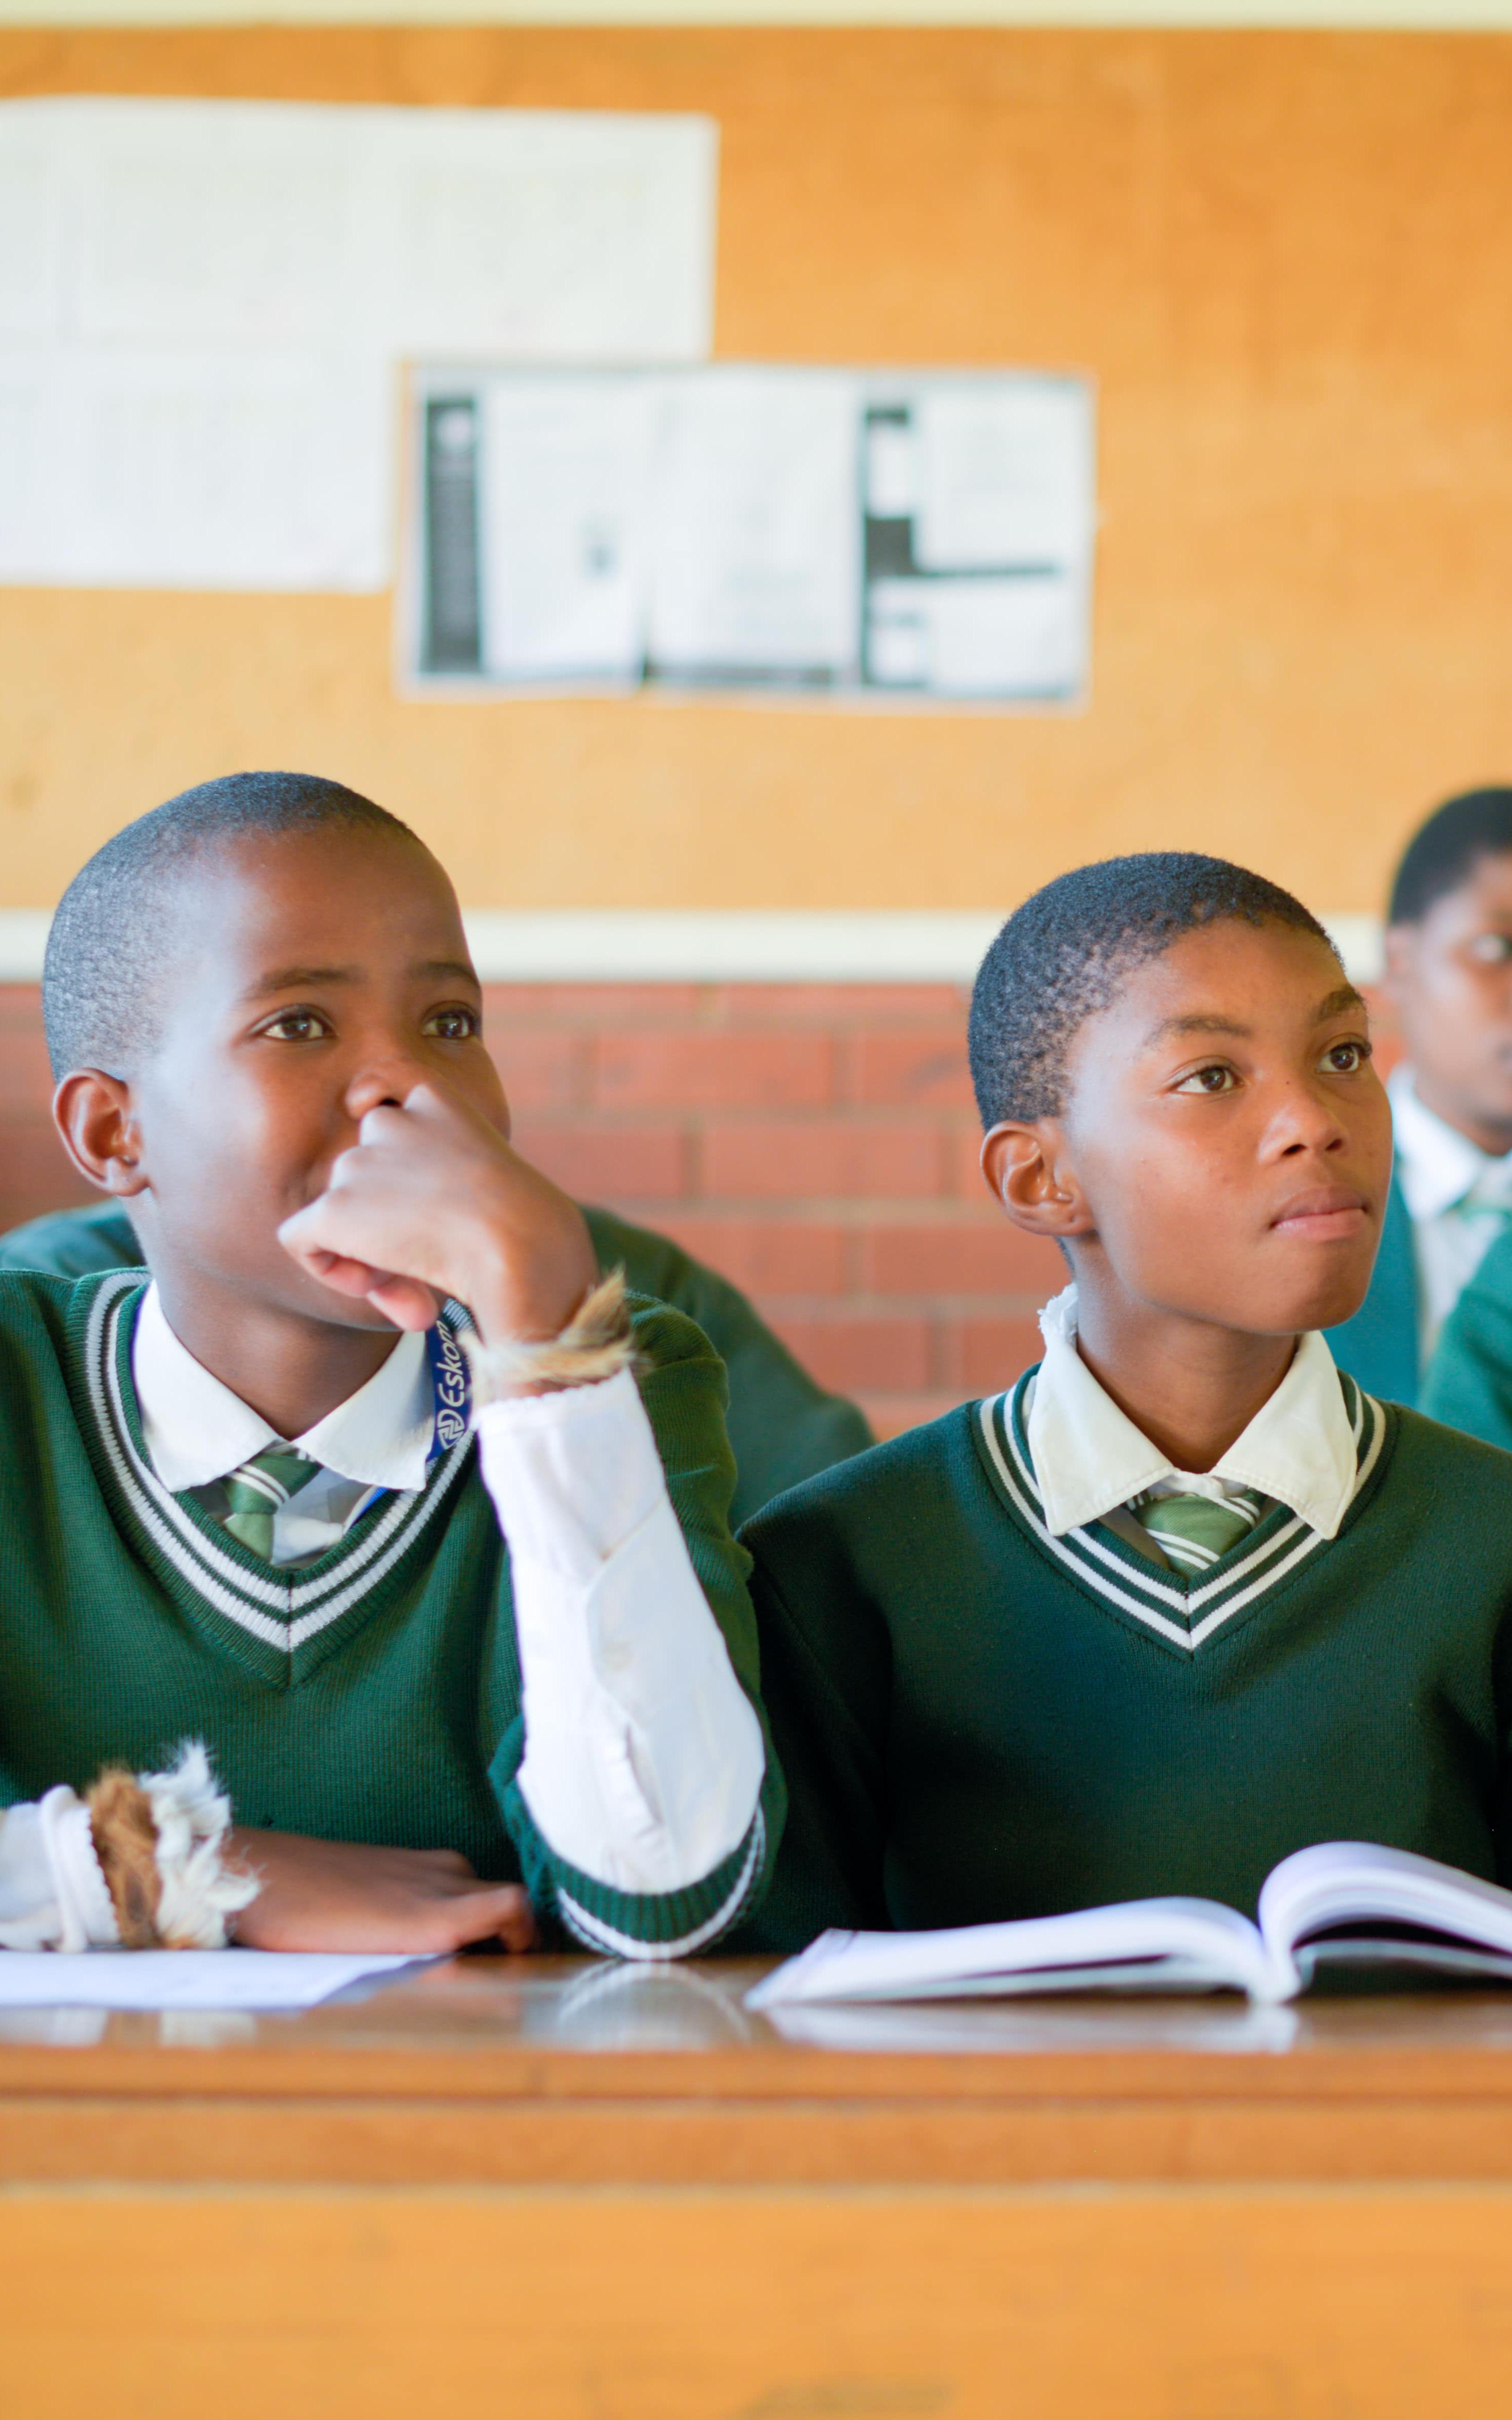 Boys in school uniform sit in a classroom